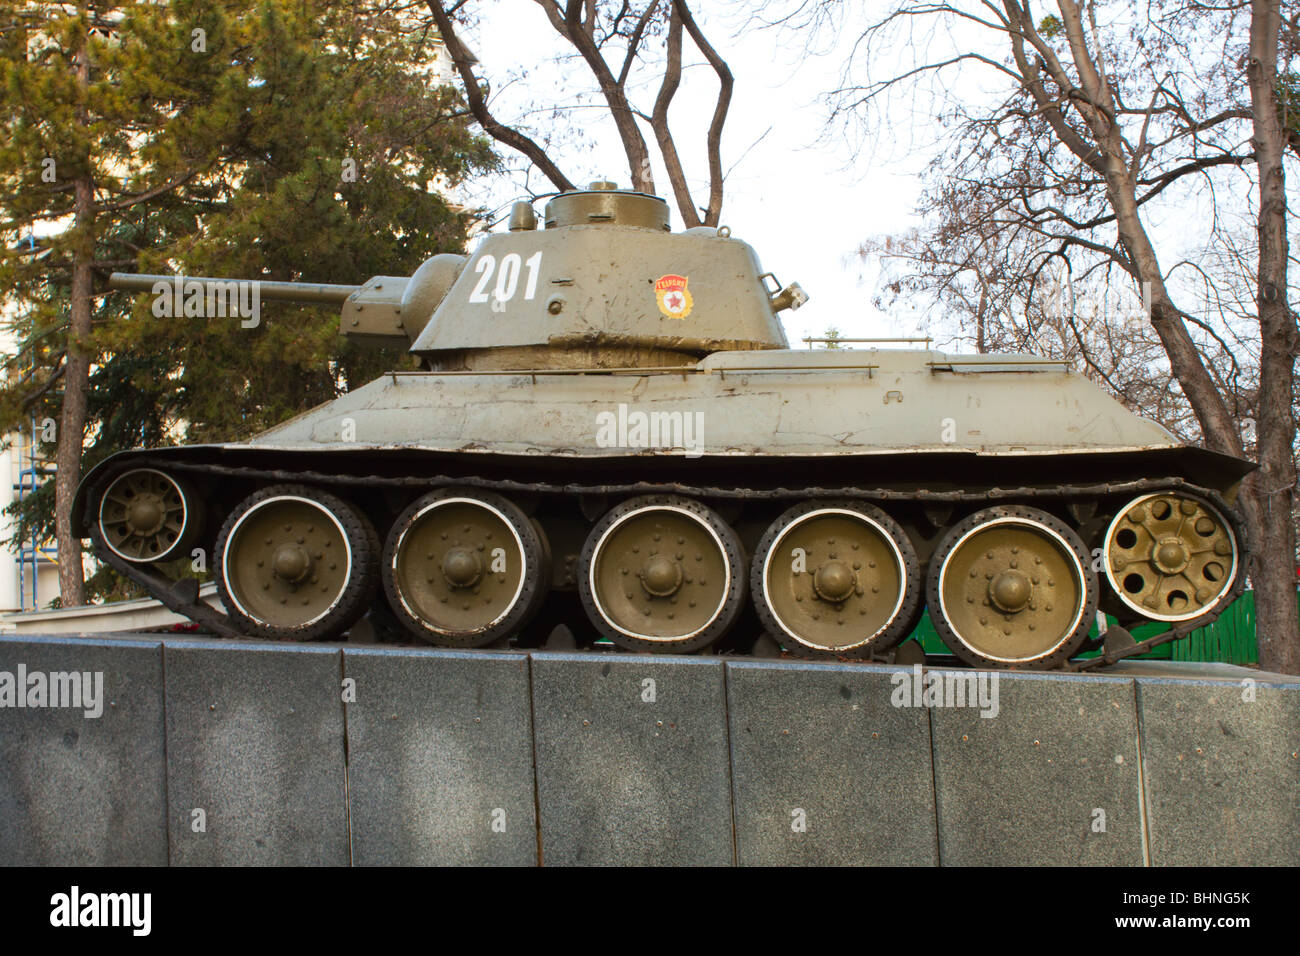 Tank that fought in World War II. Stock Photo